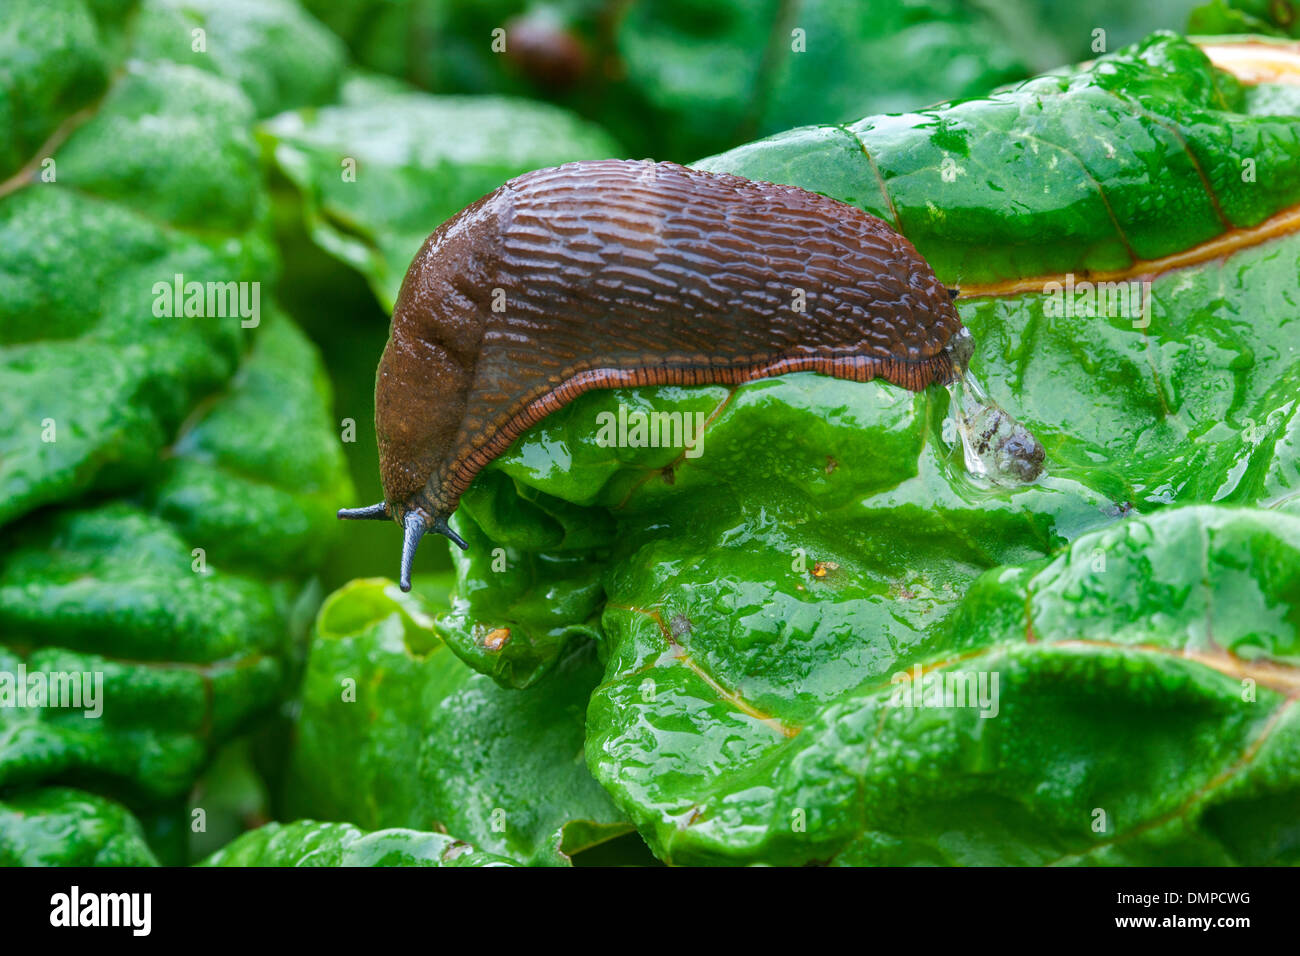 Large red slug / European red slug (Arion rufus) on greens in vegetable garden Stock Photo